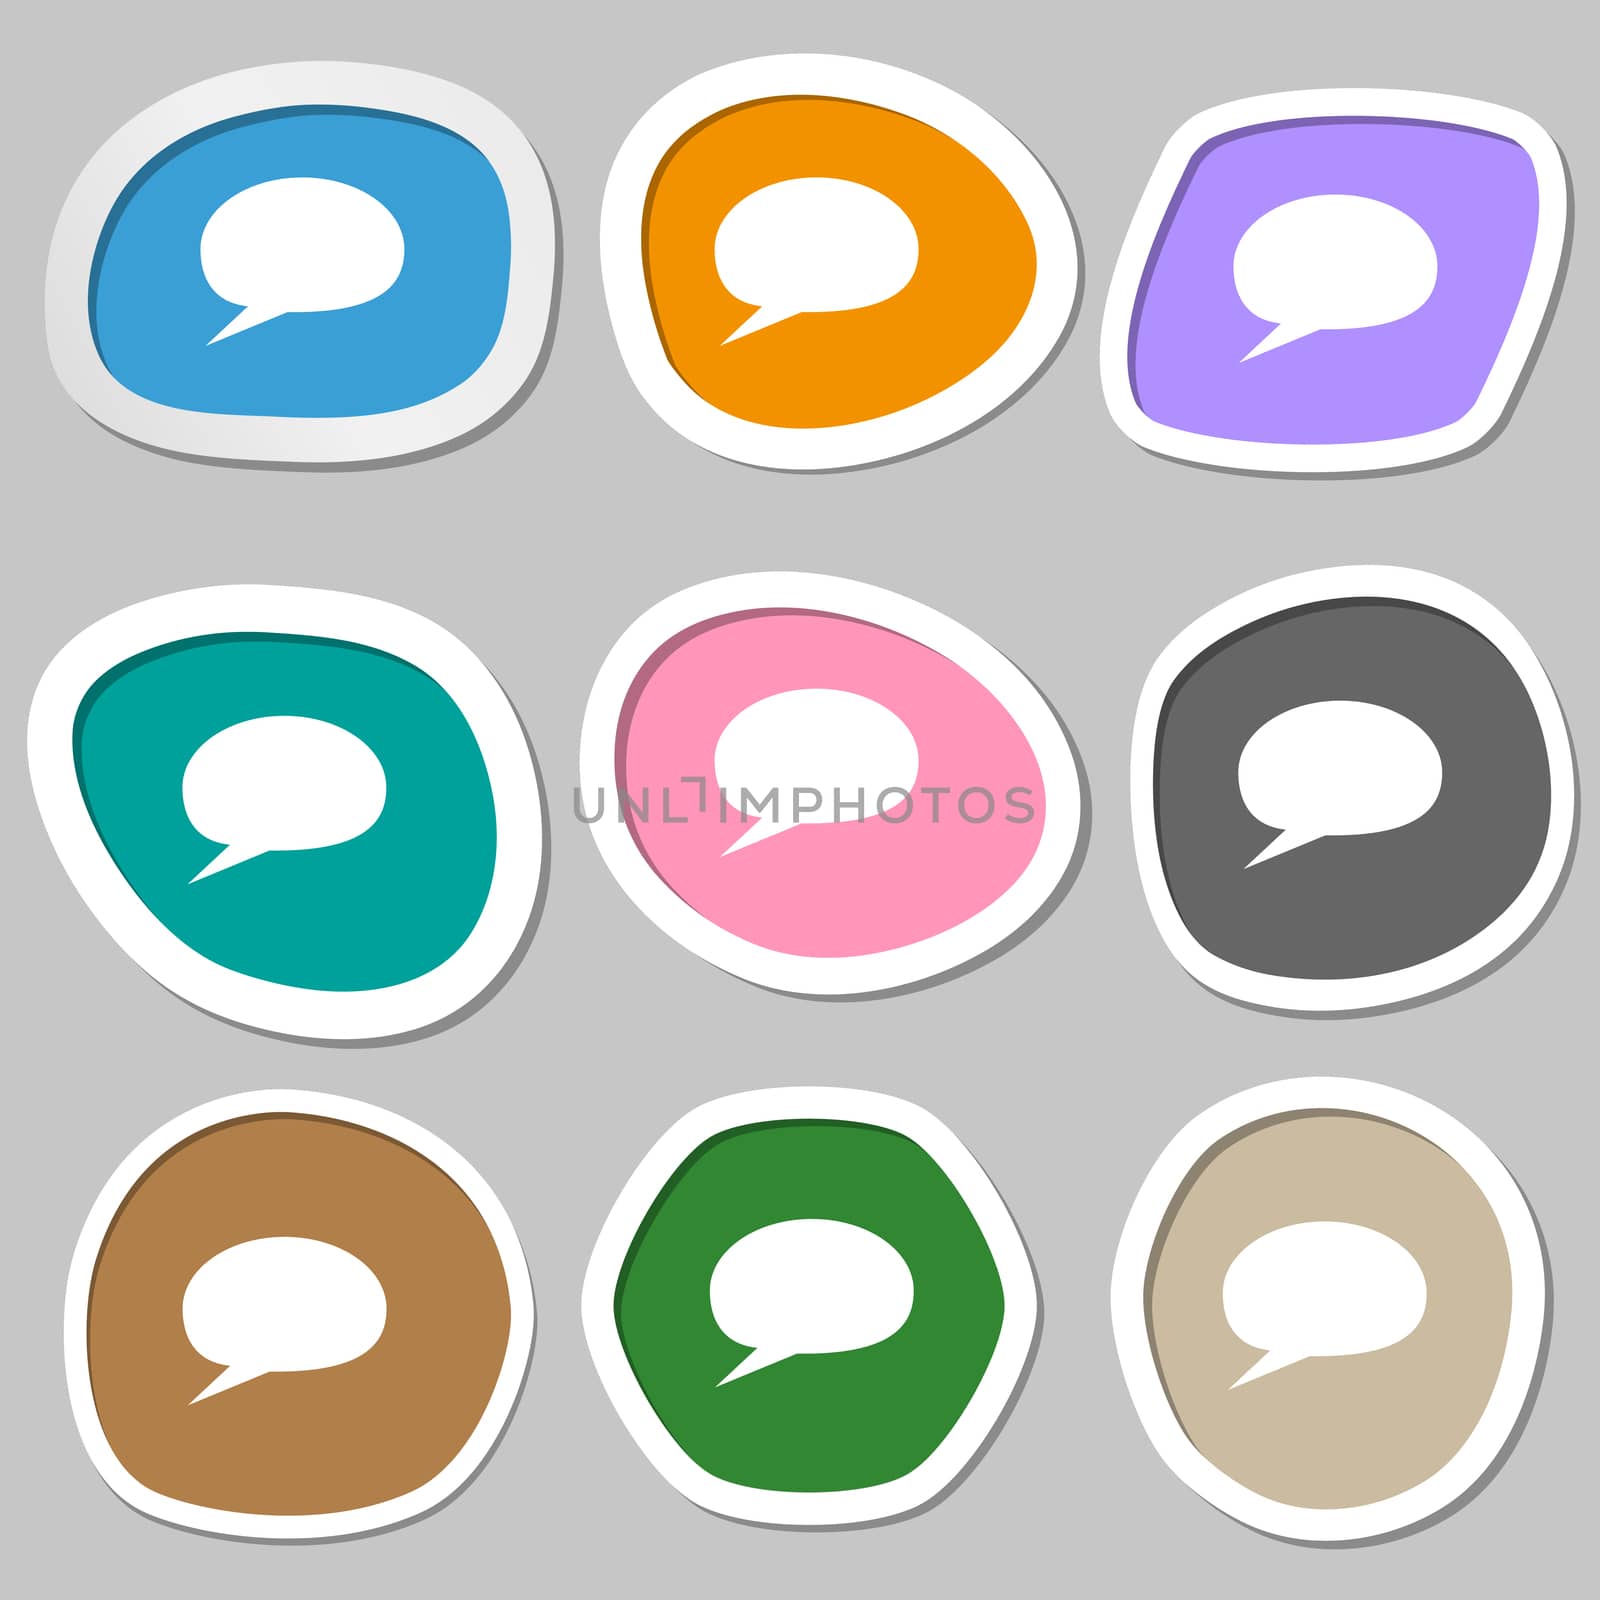 Speech bubble icons. Think cloud symbols. Multicolored paper stickers. illustration